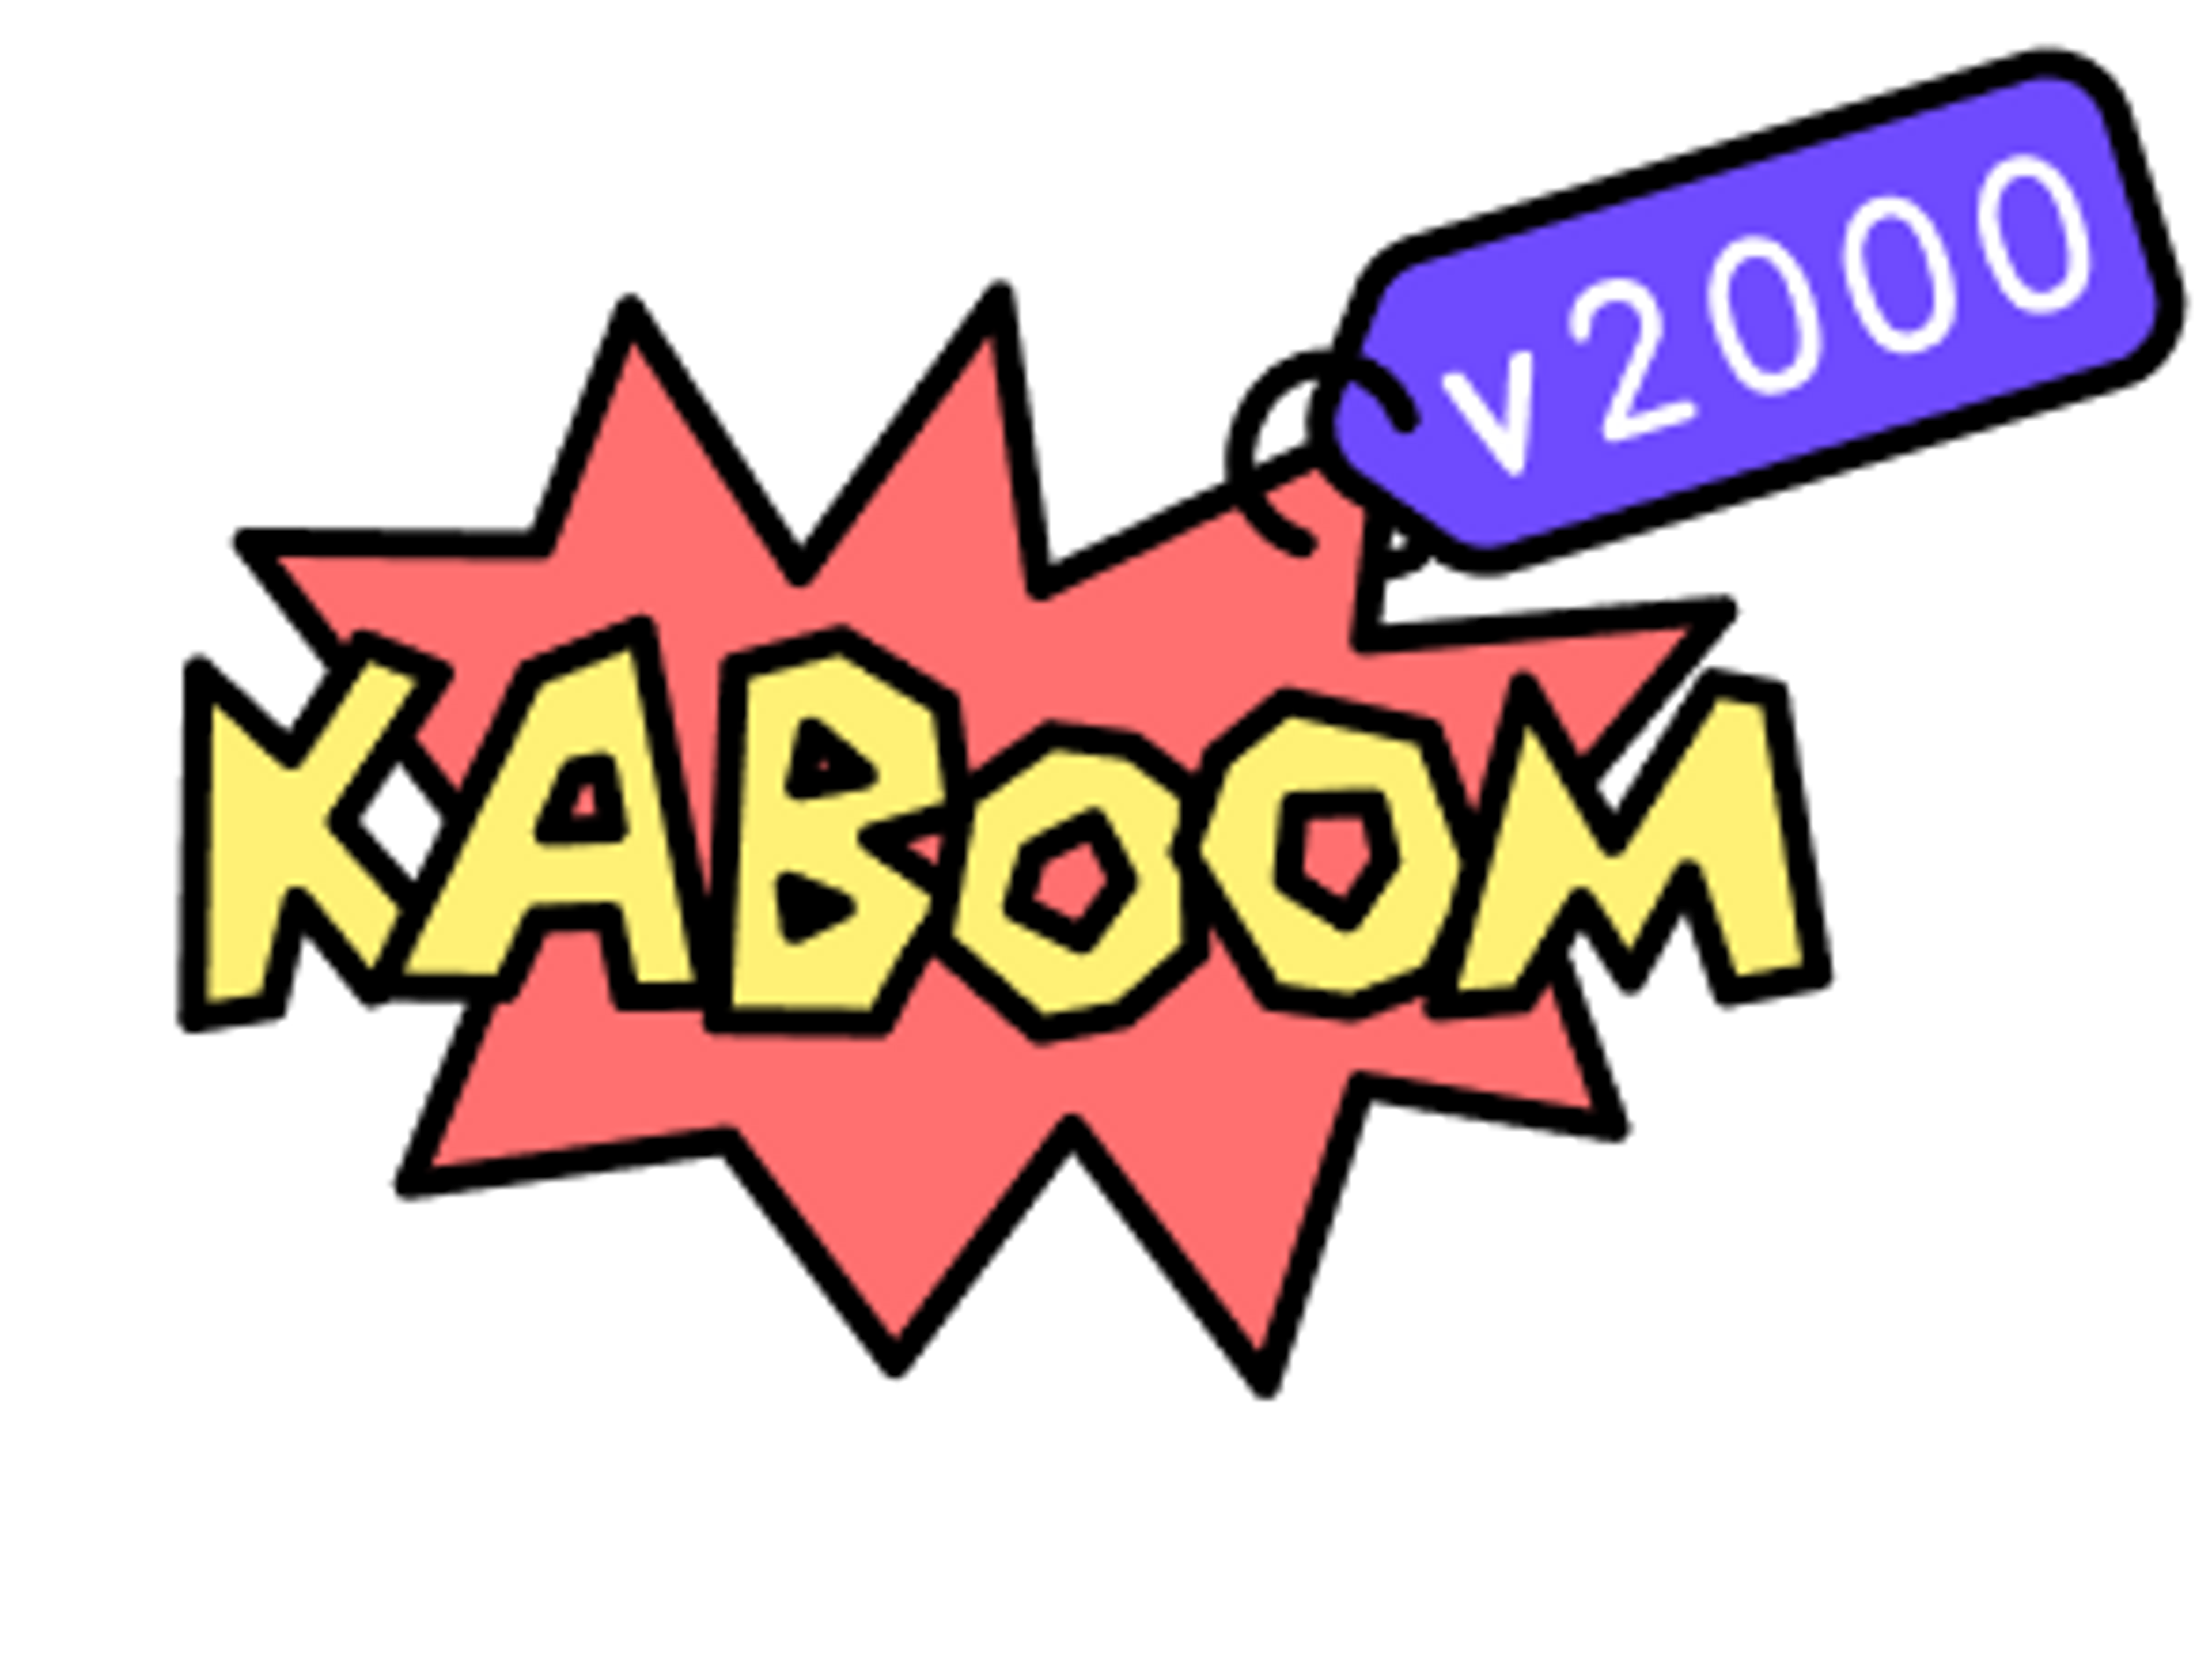 kaboom2000